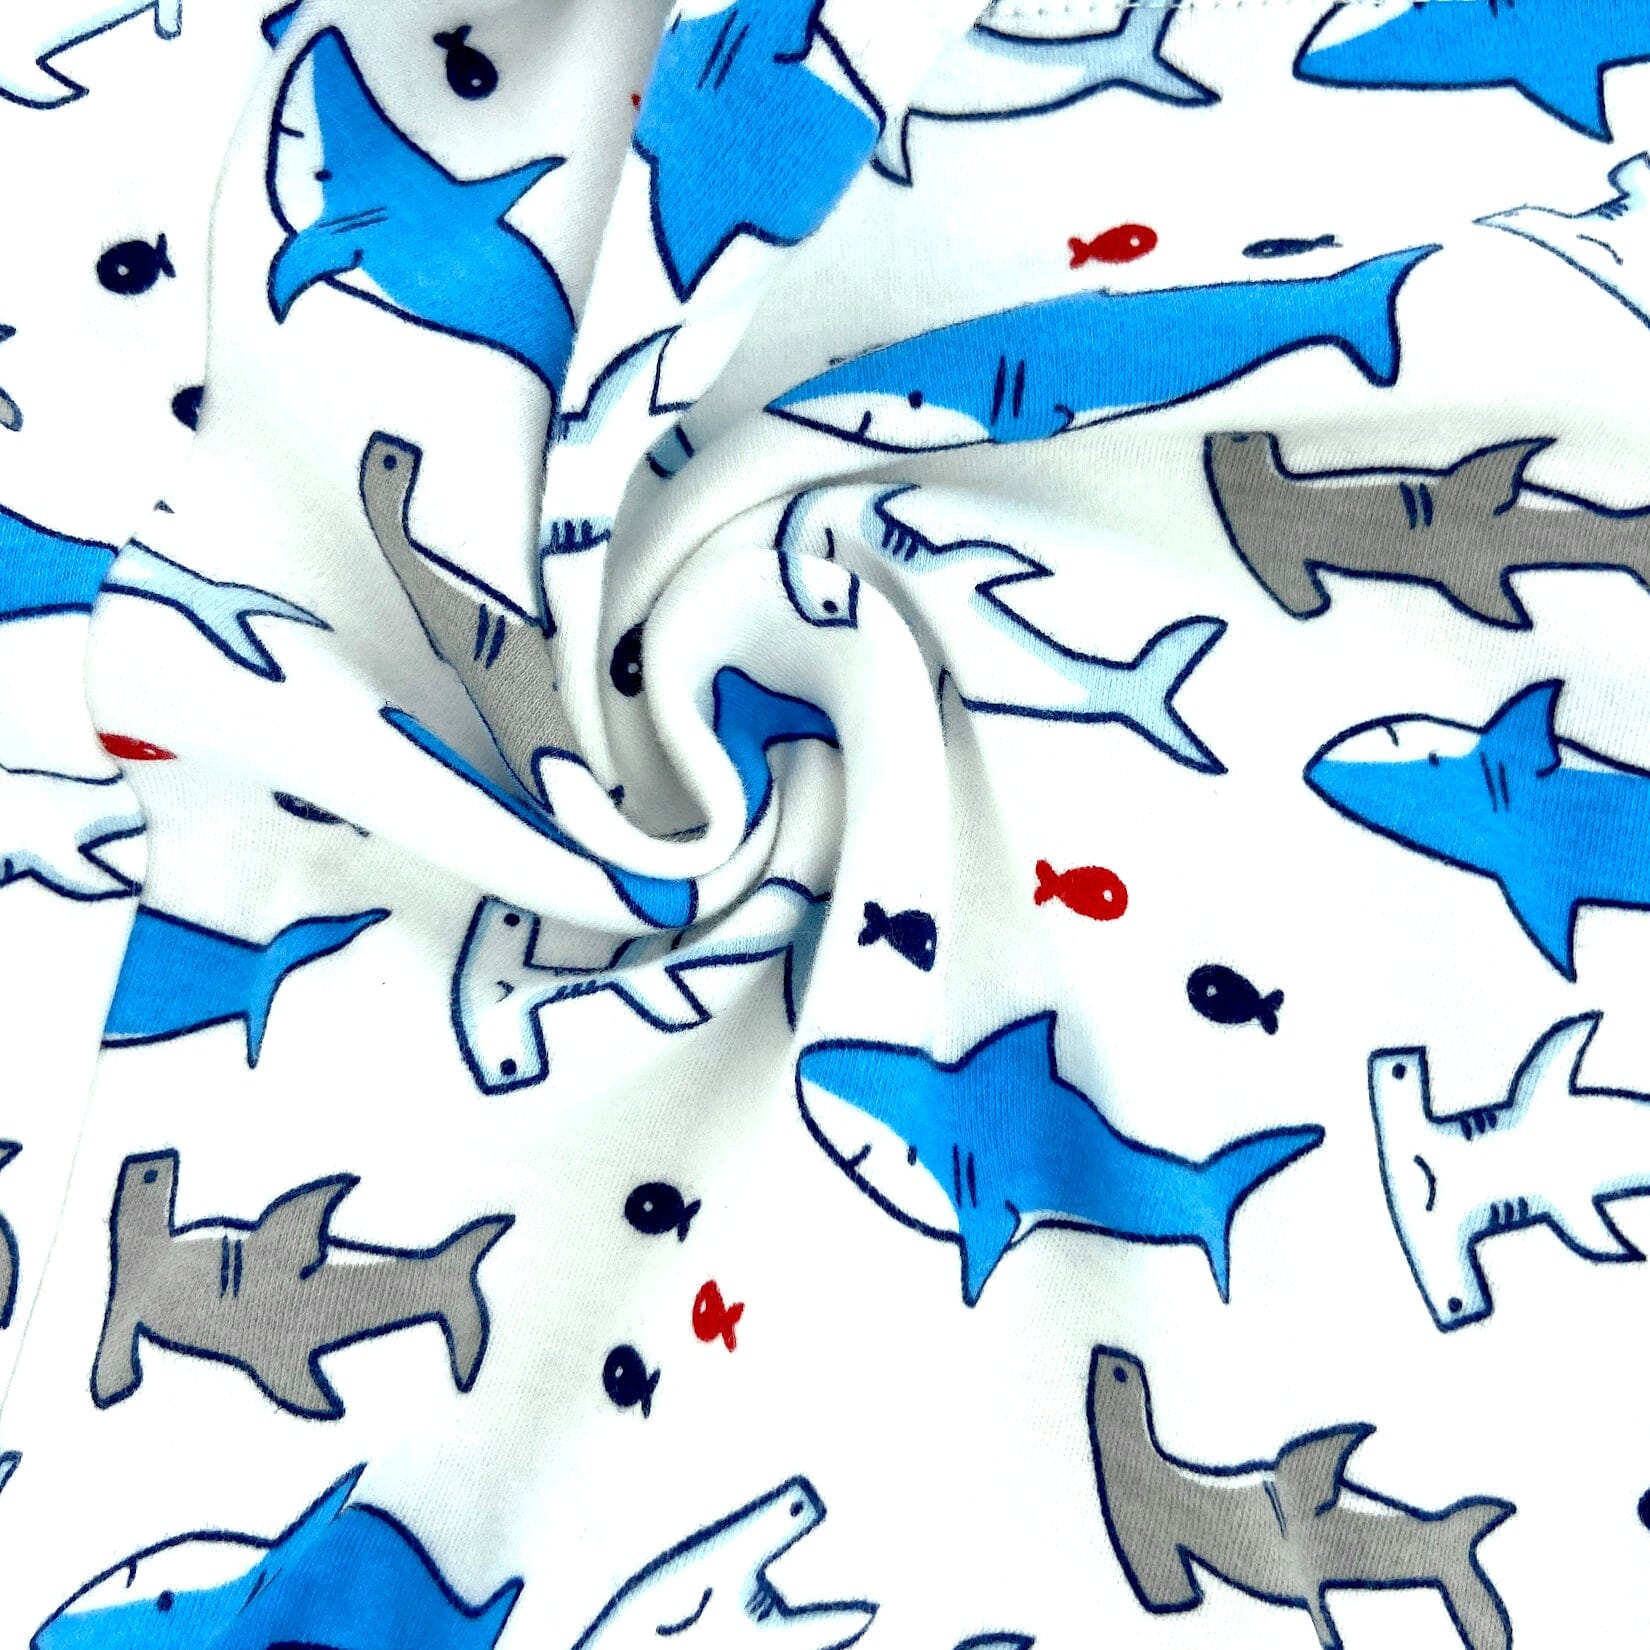 Women's White Sea Creatures Themed Shark Print Knit Pyjama Shorts